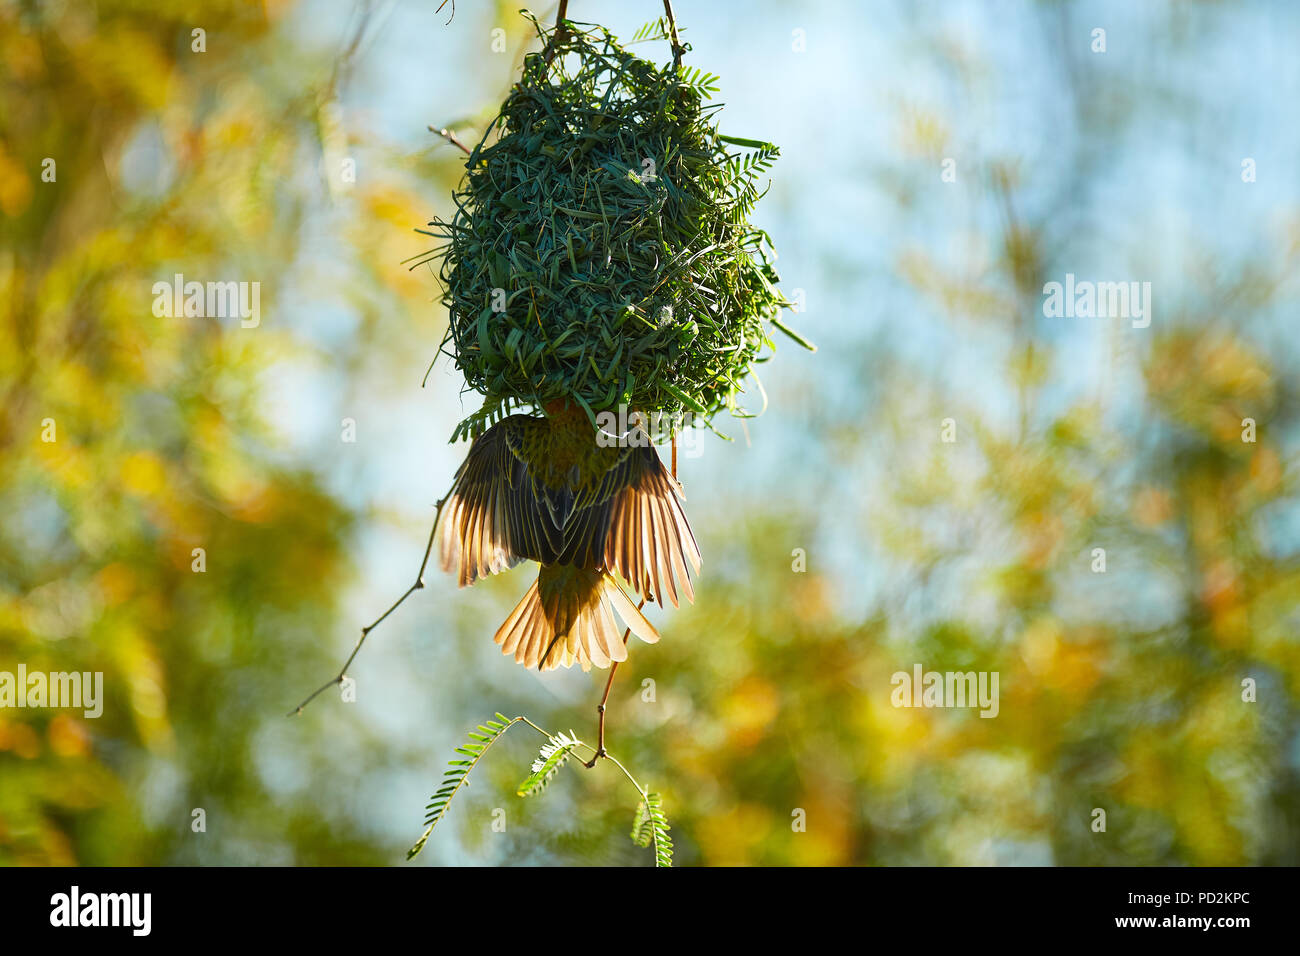 Cape Weaver bird in Camel Thorn Tree Stock Photo